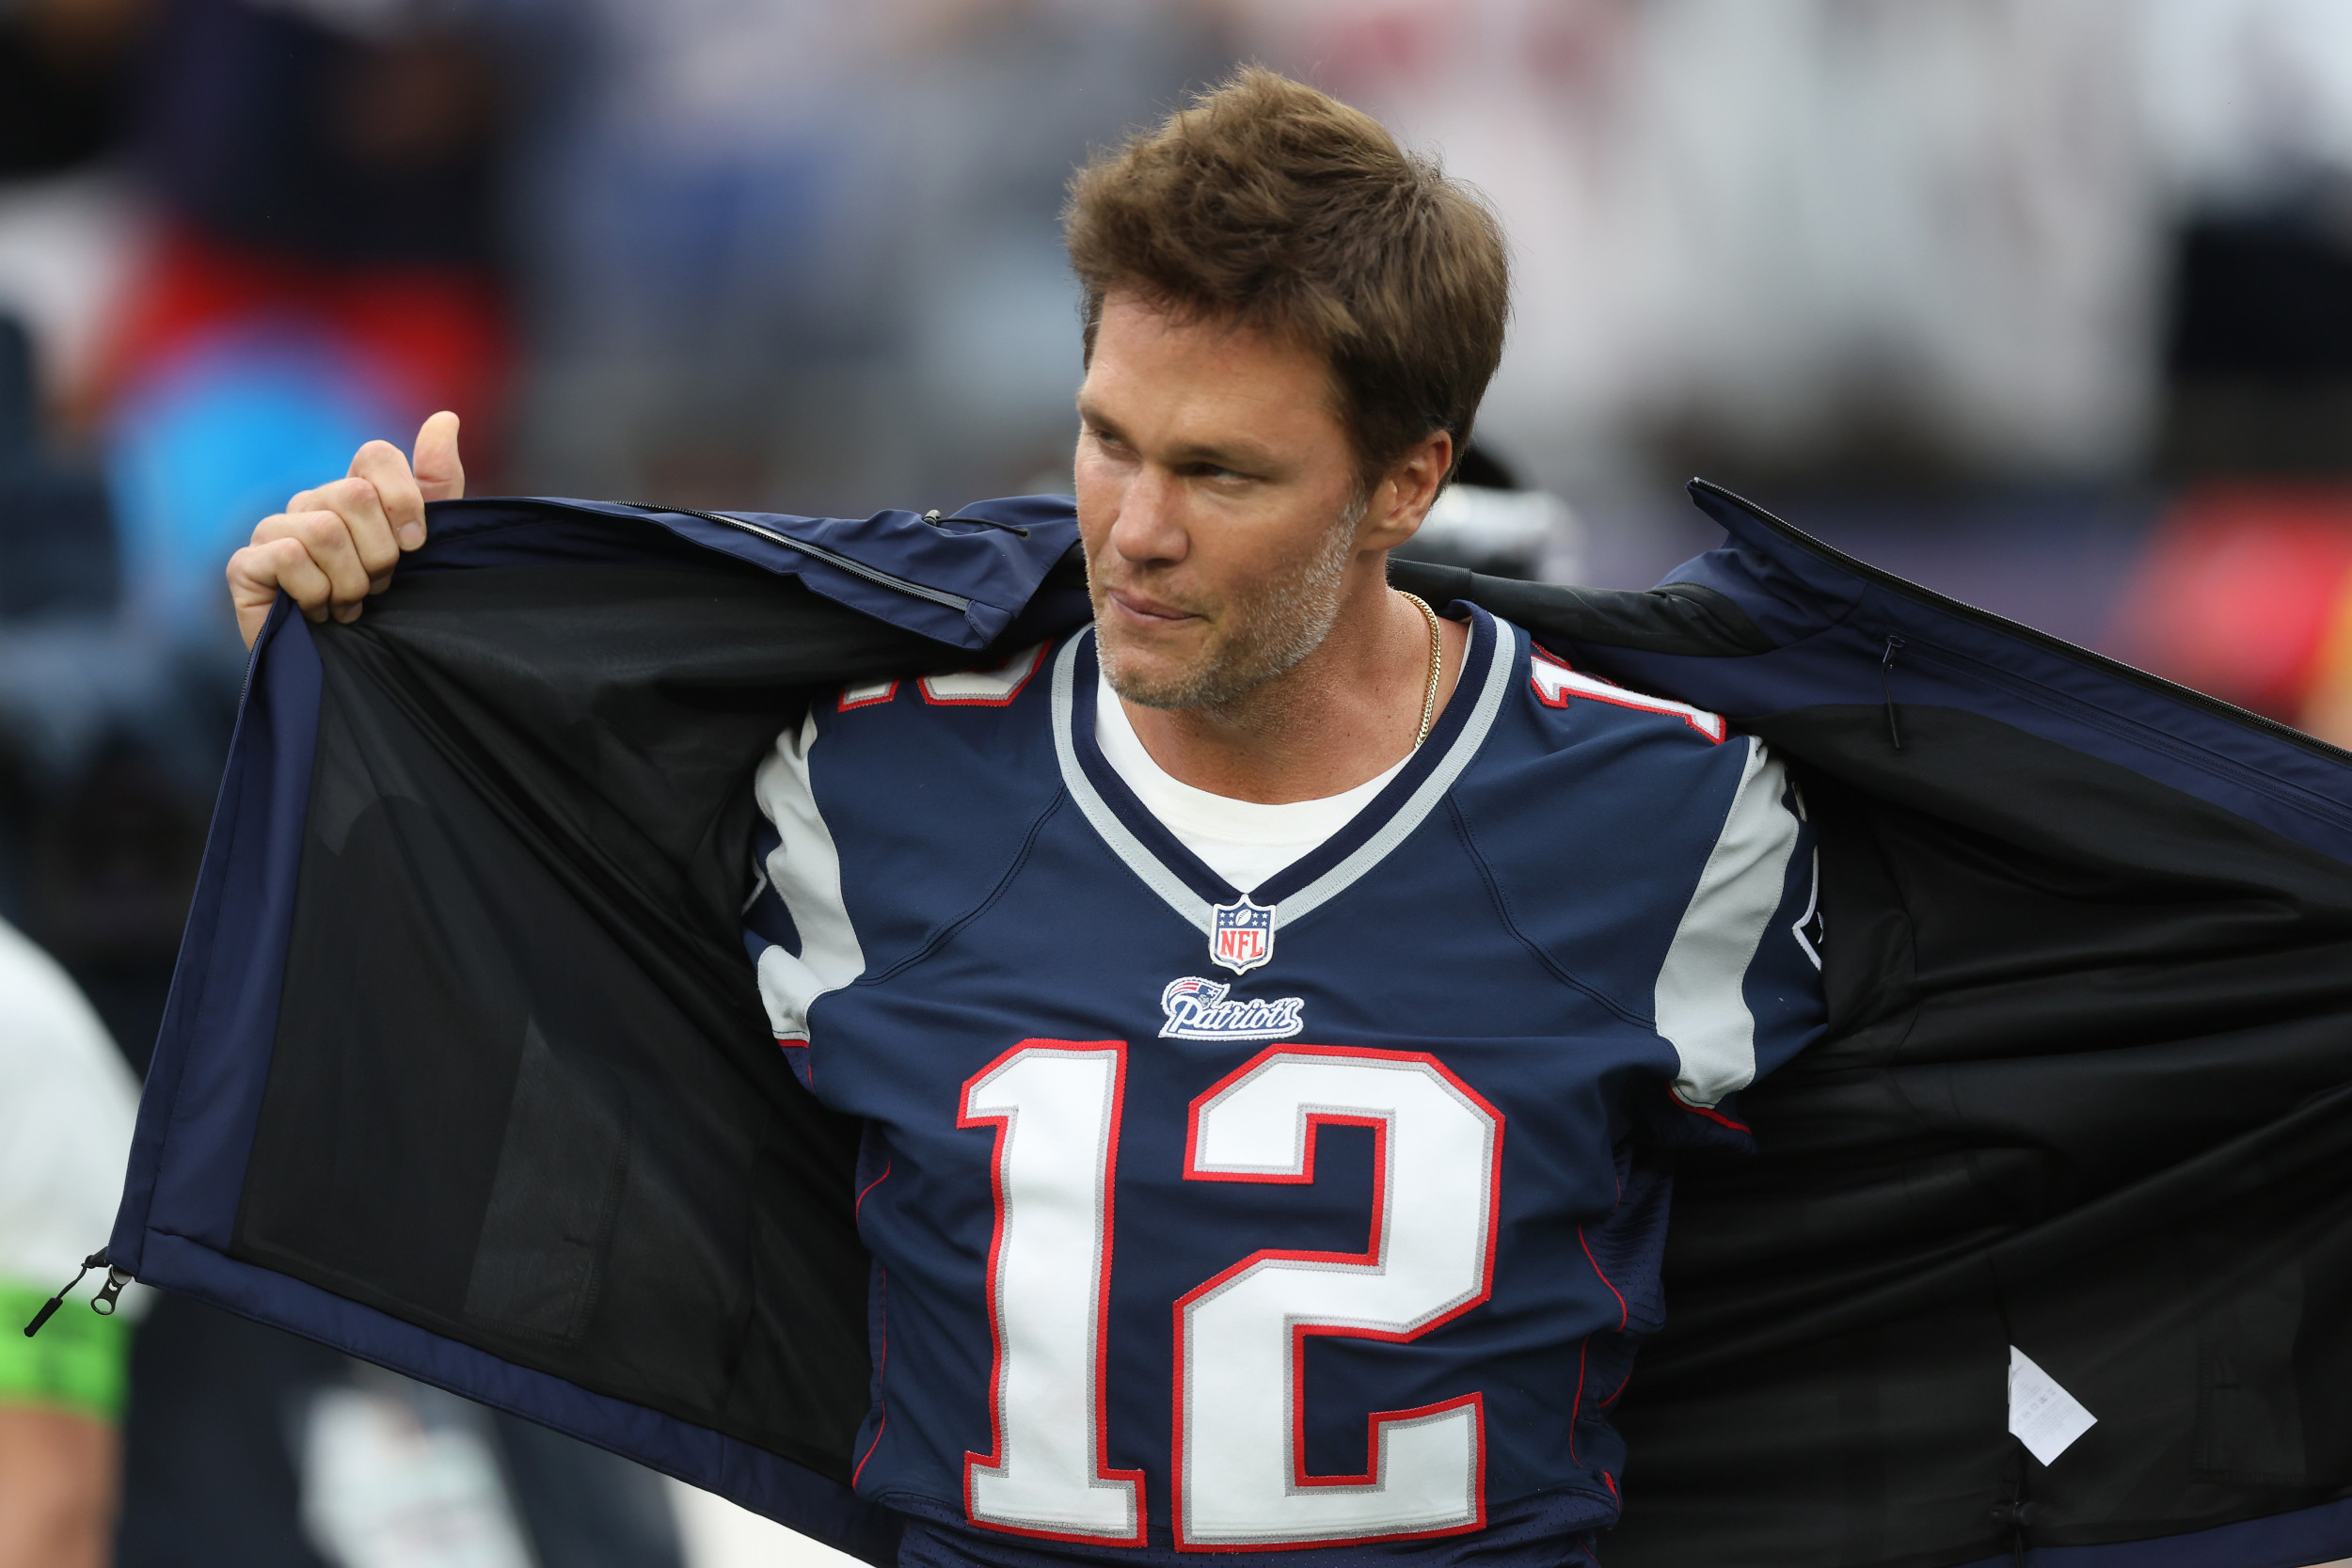 NFL legend Tom Brady quits – then denies he is retiring